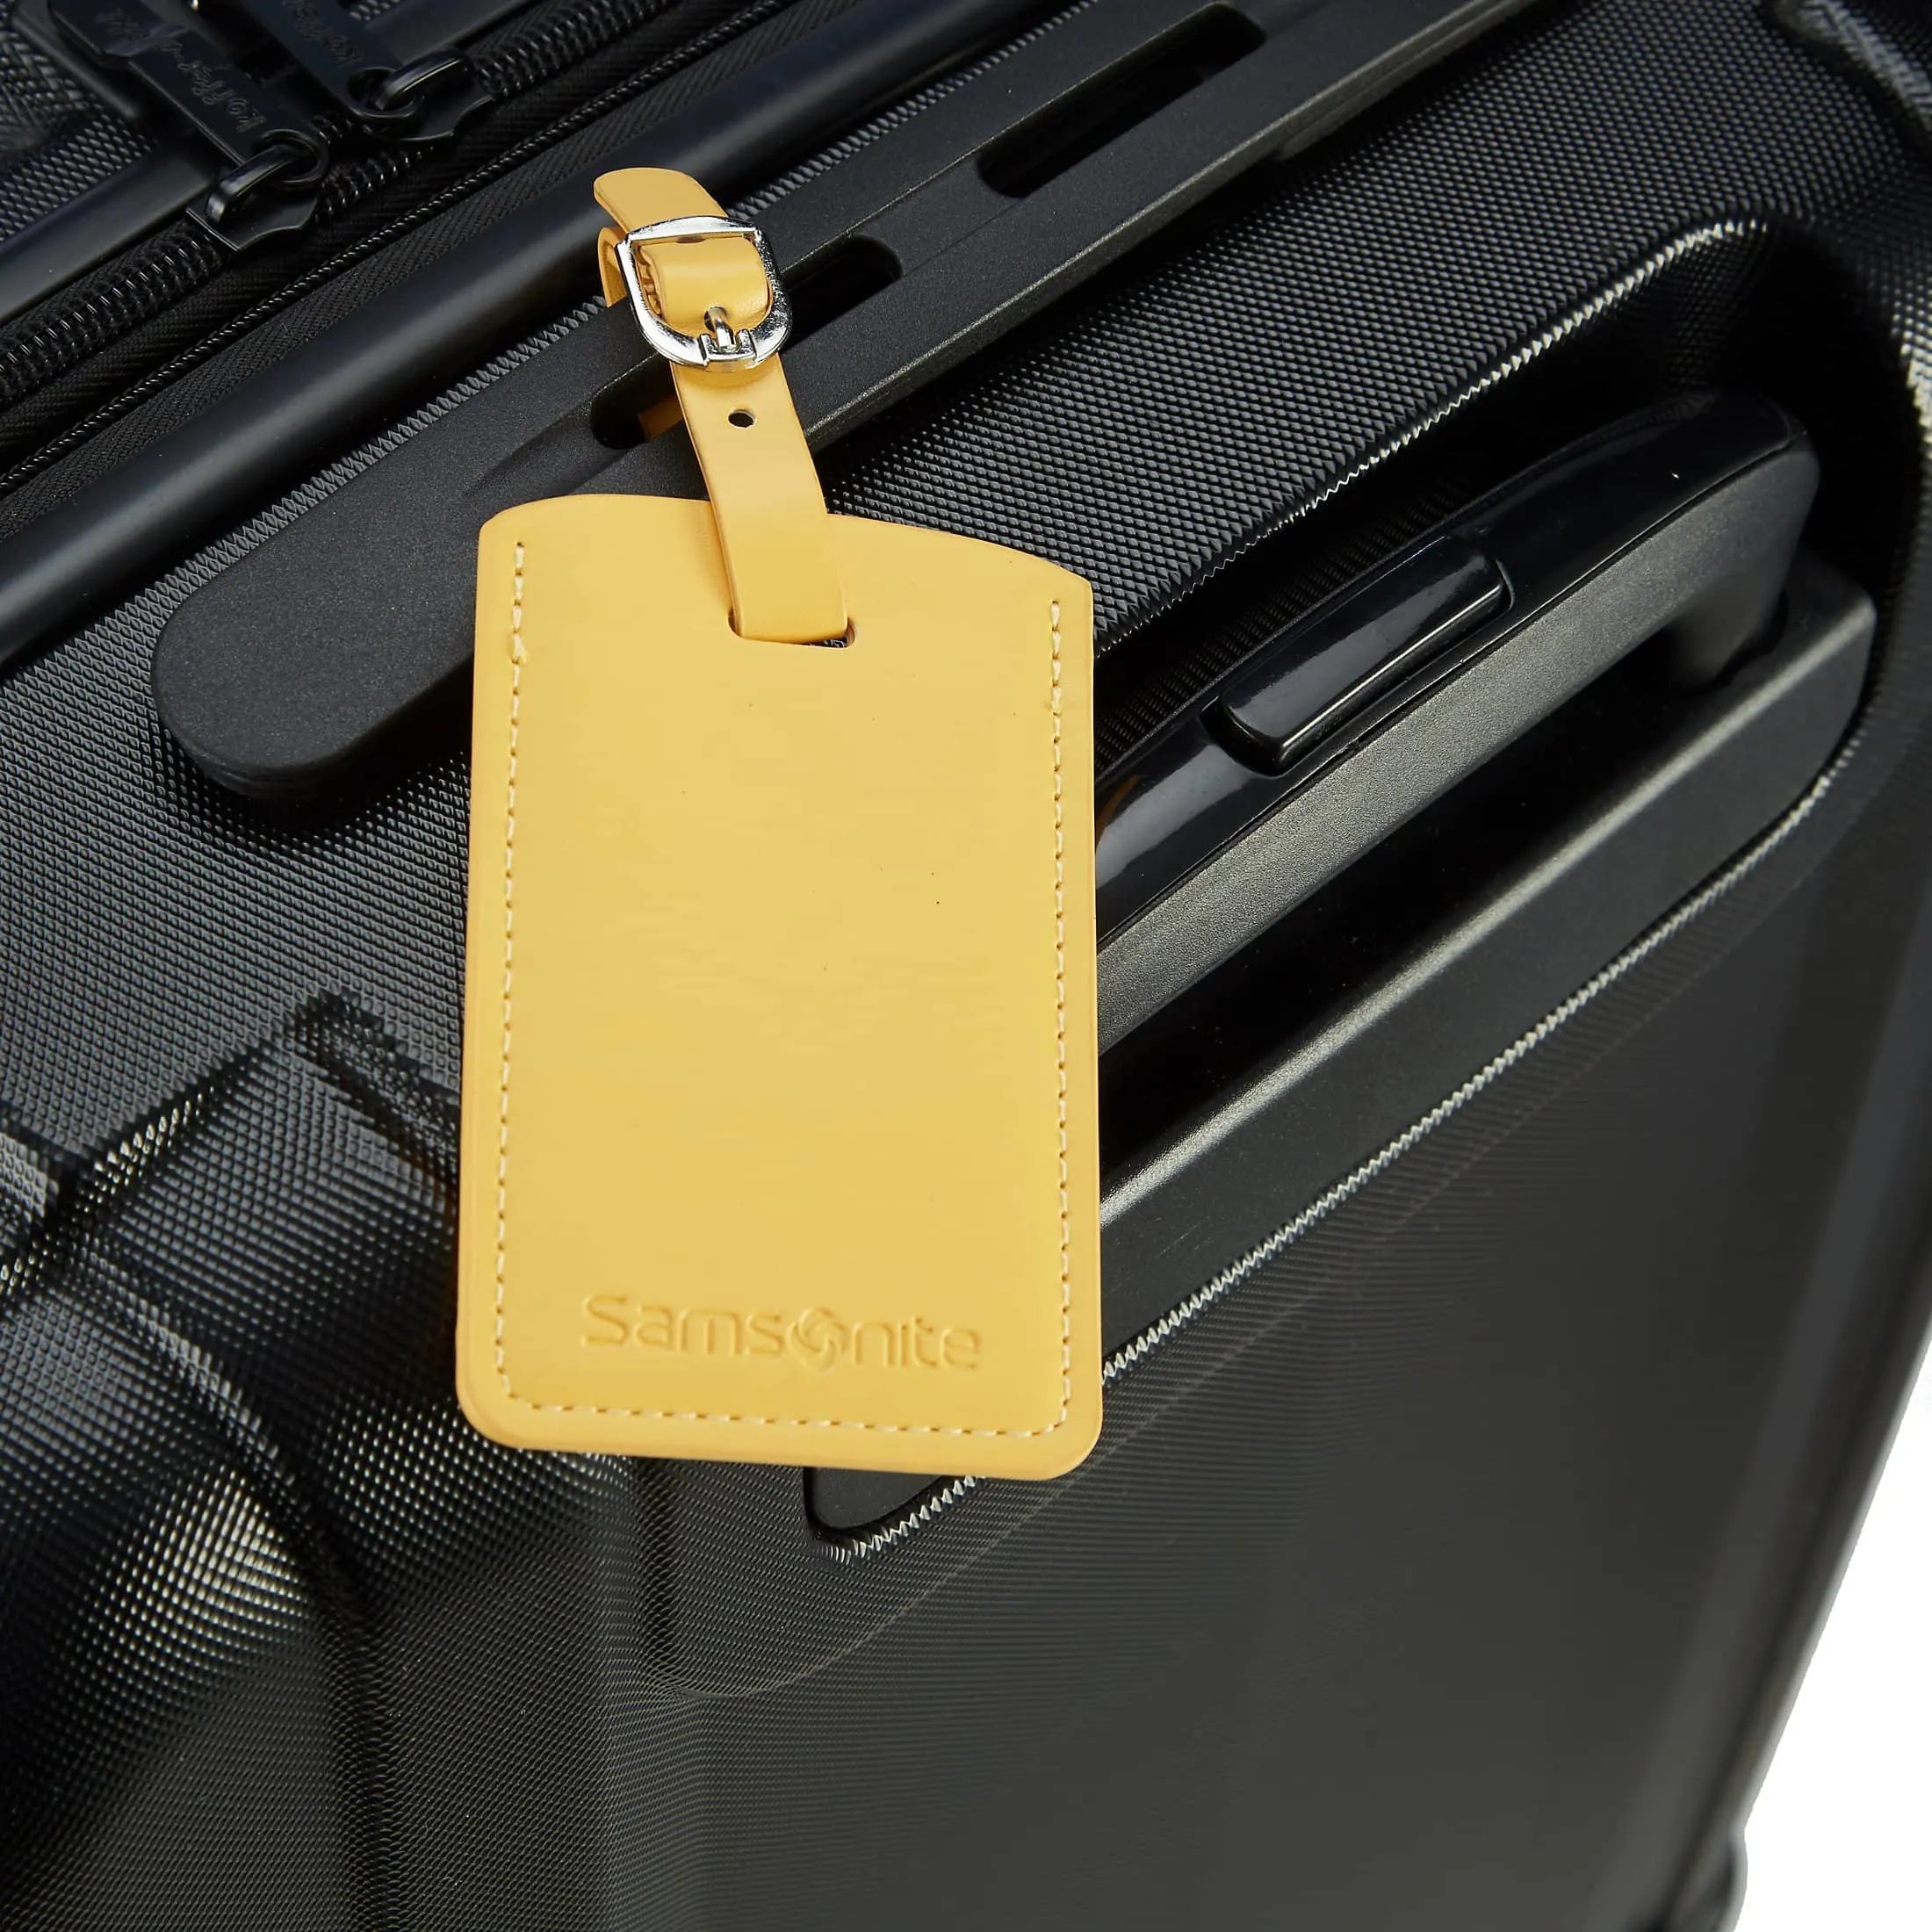 Samsonite Travel Accessories luggage tag set - midnight blue